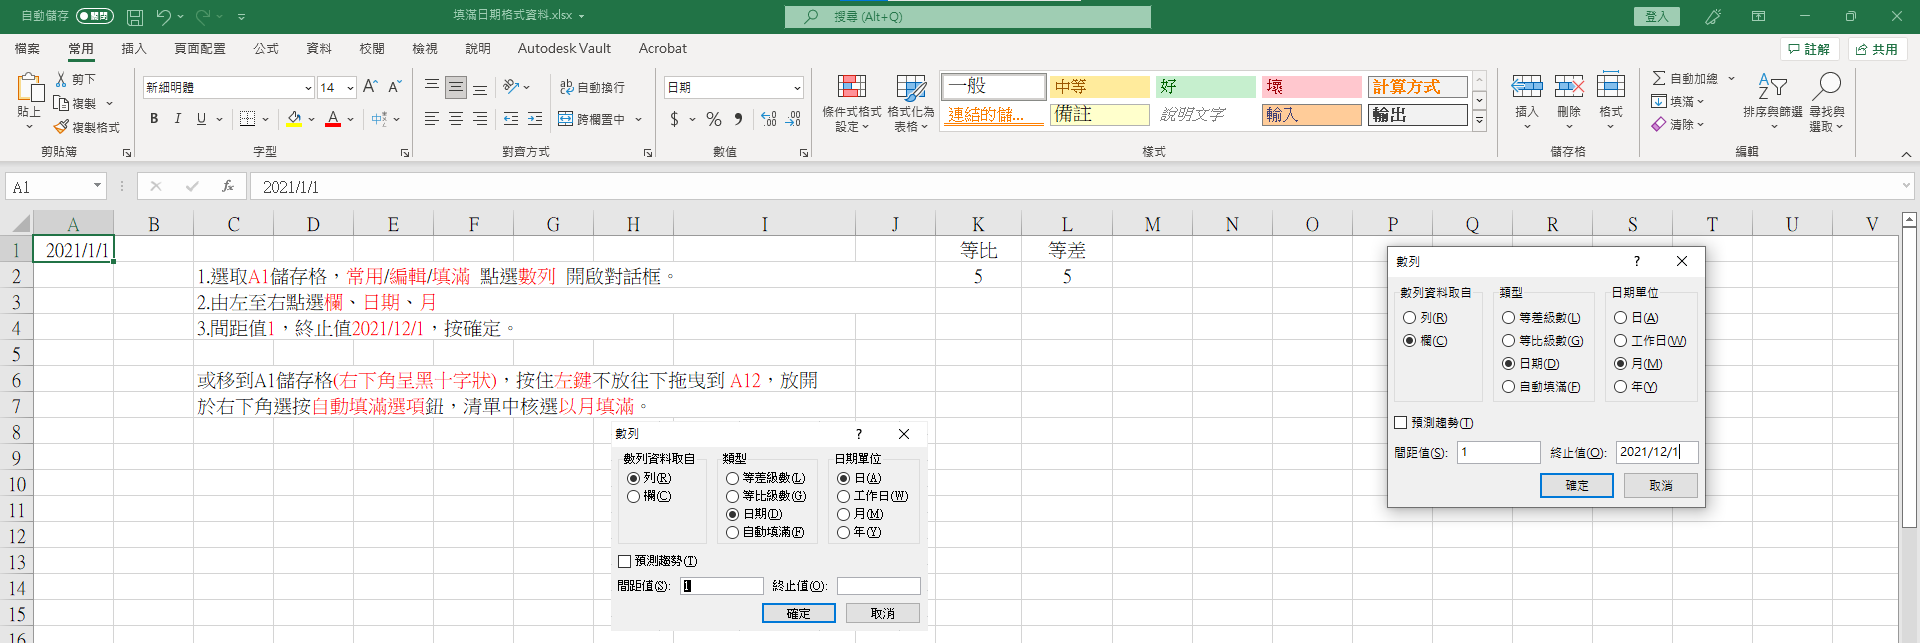 Excel條件式格式設定,編輯自訂清單 - 儲蓄保險王